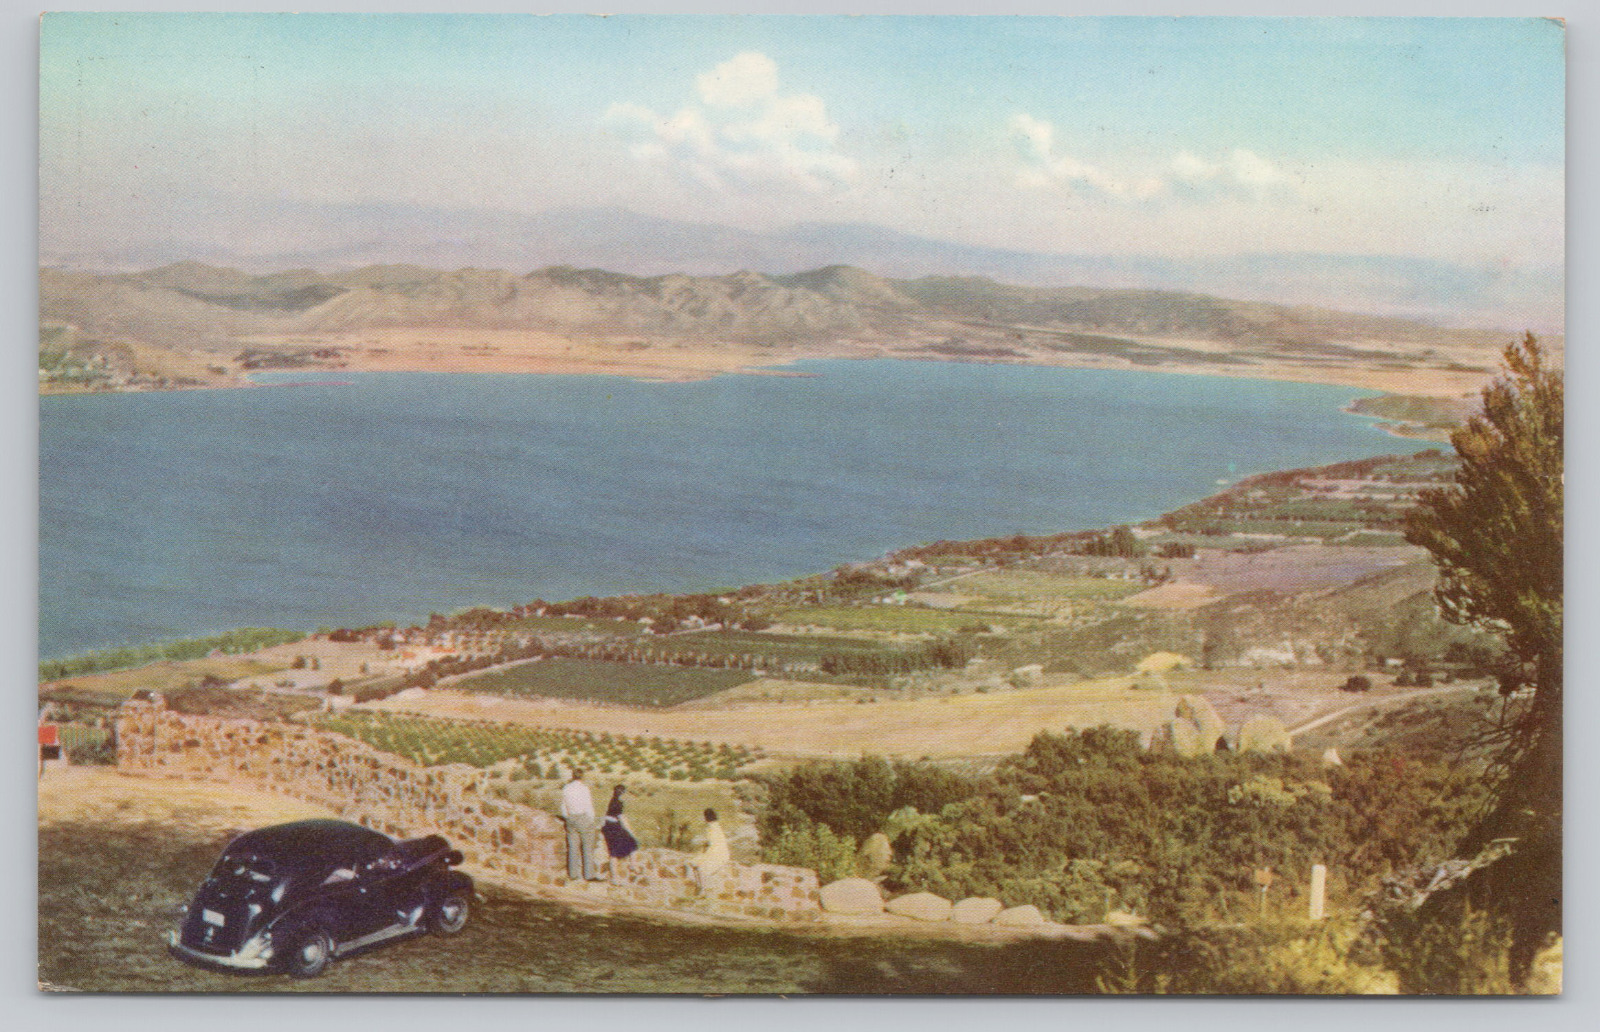 Postcard Vintage Car Lake Elsinore California 1940 Union Oil Scenes of the West